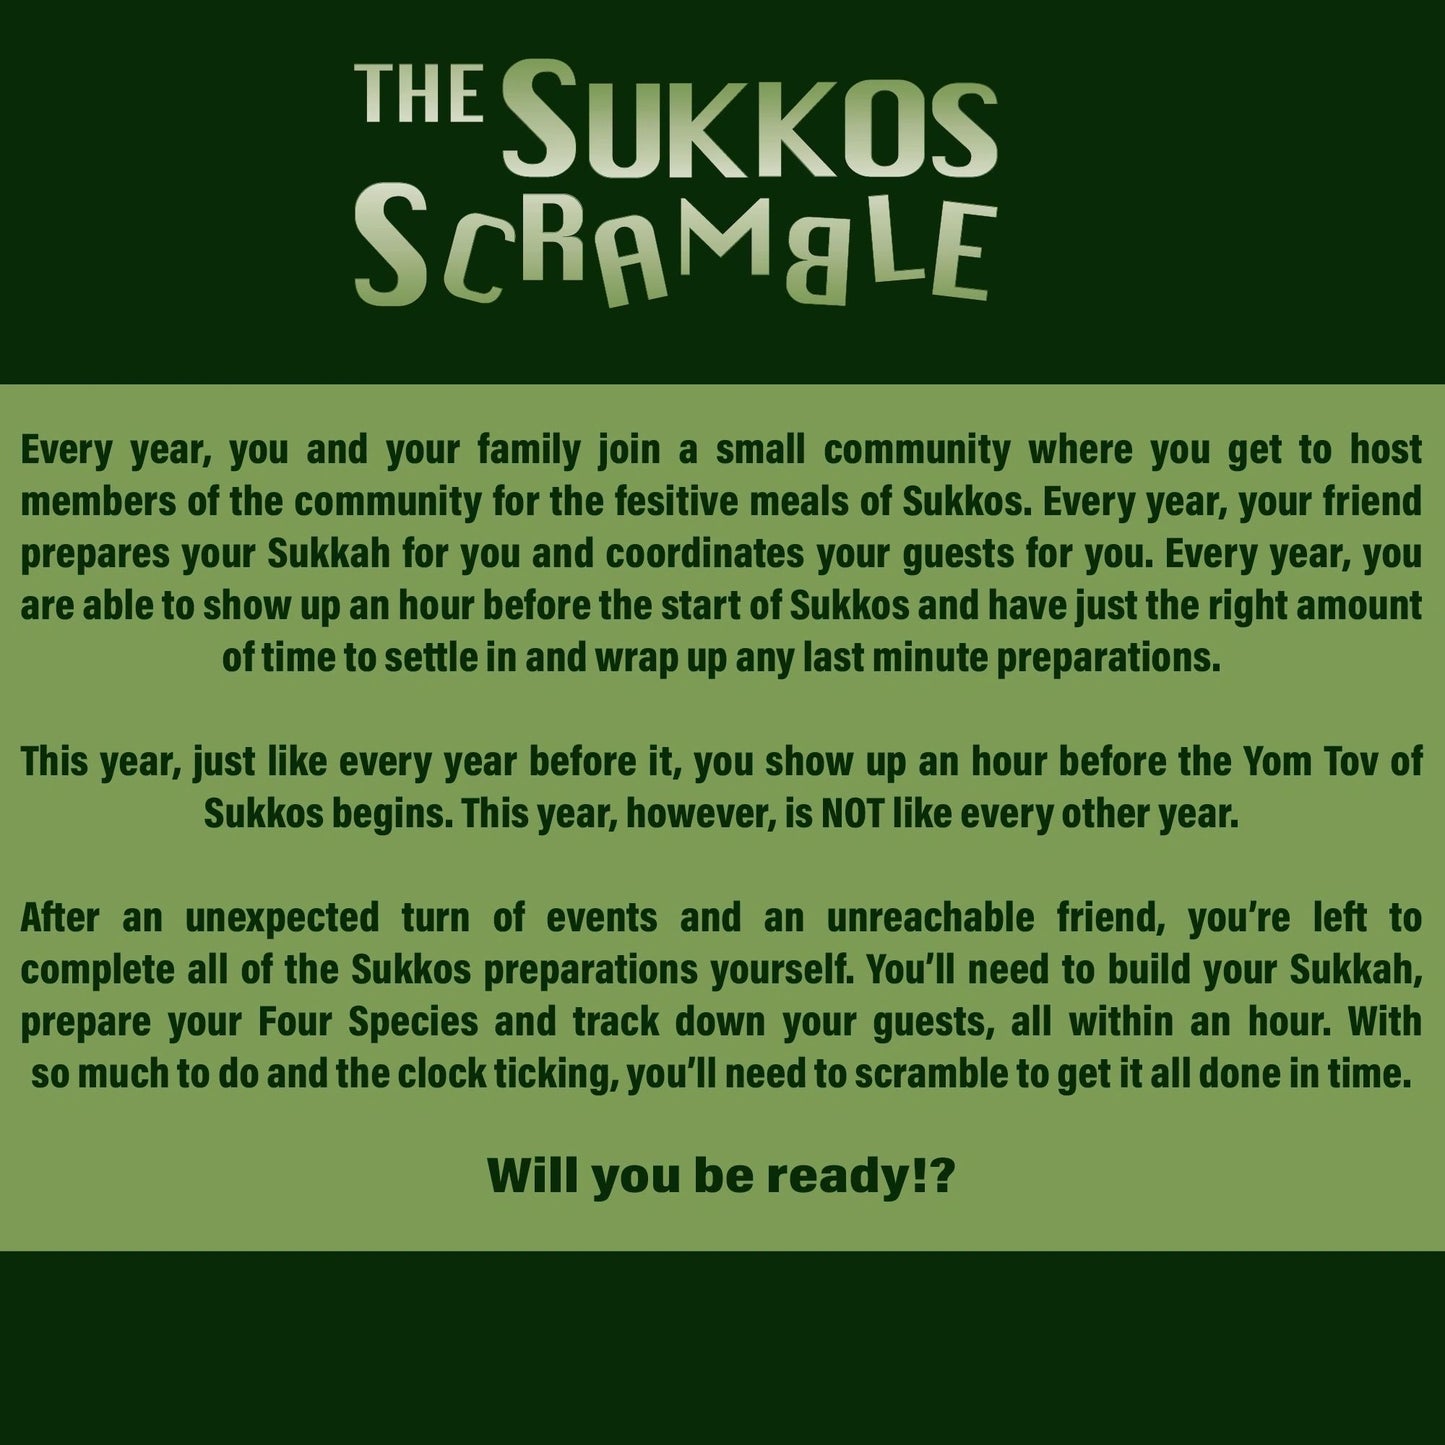 The Sukkos Scramble